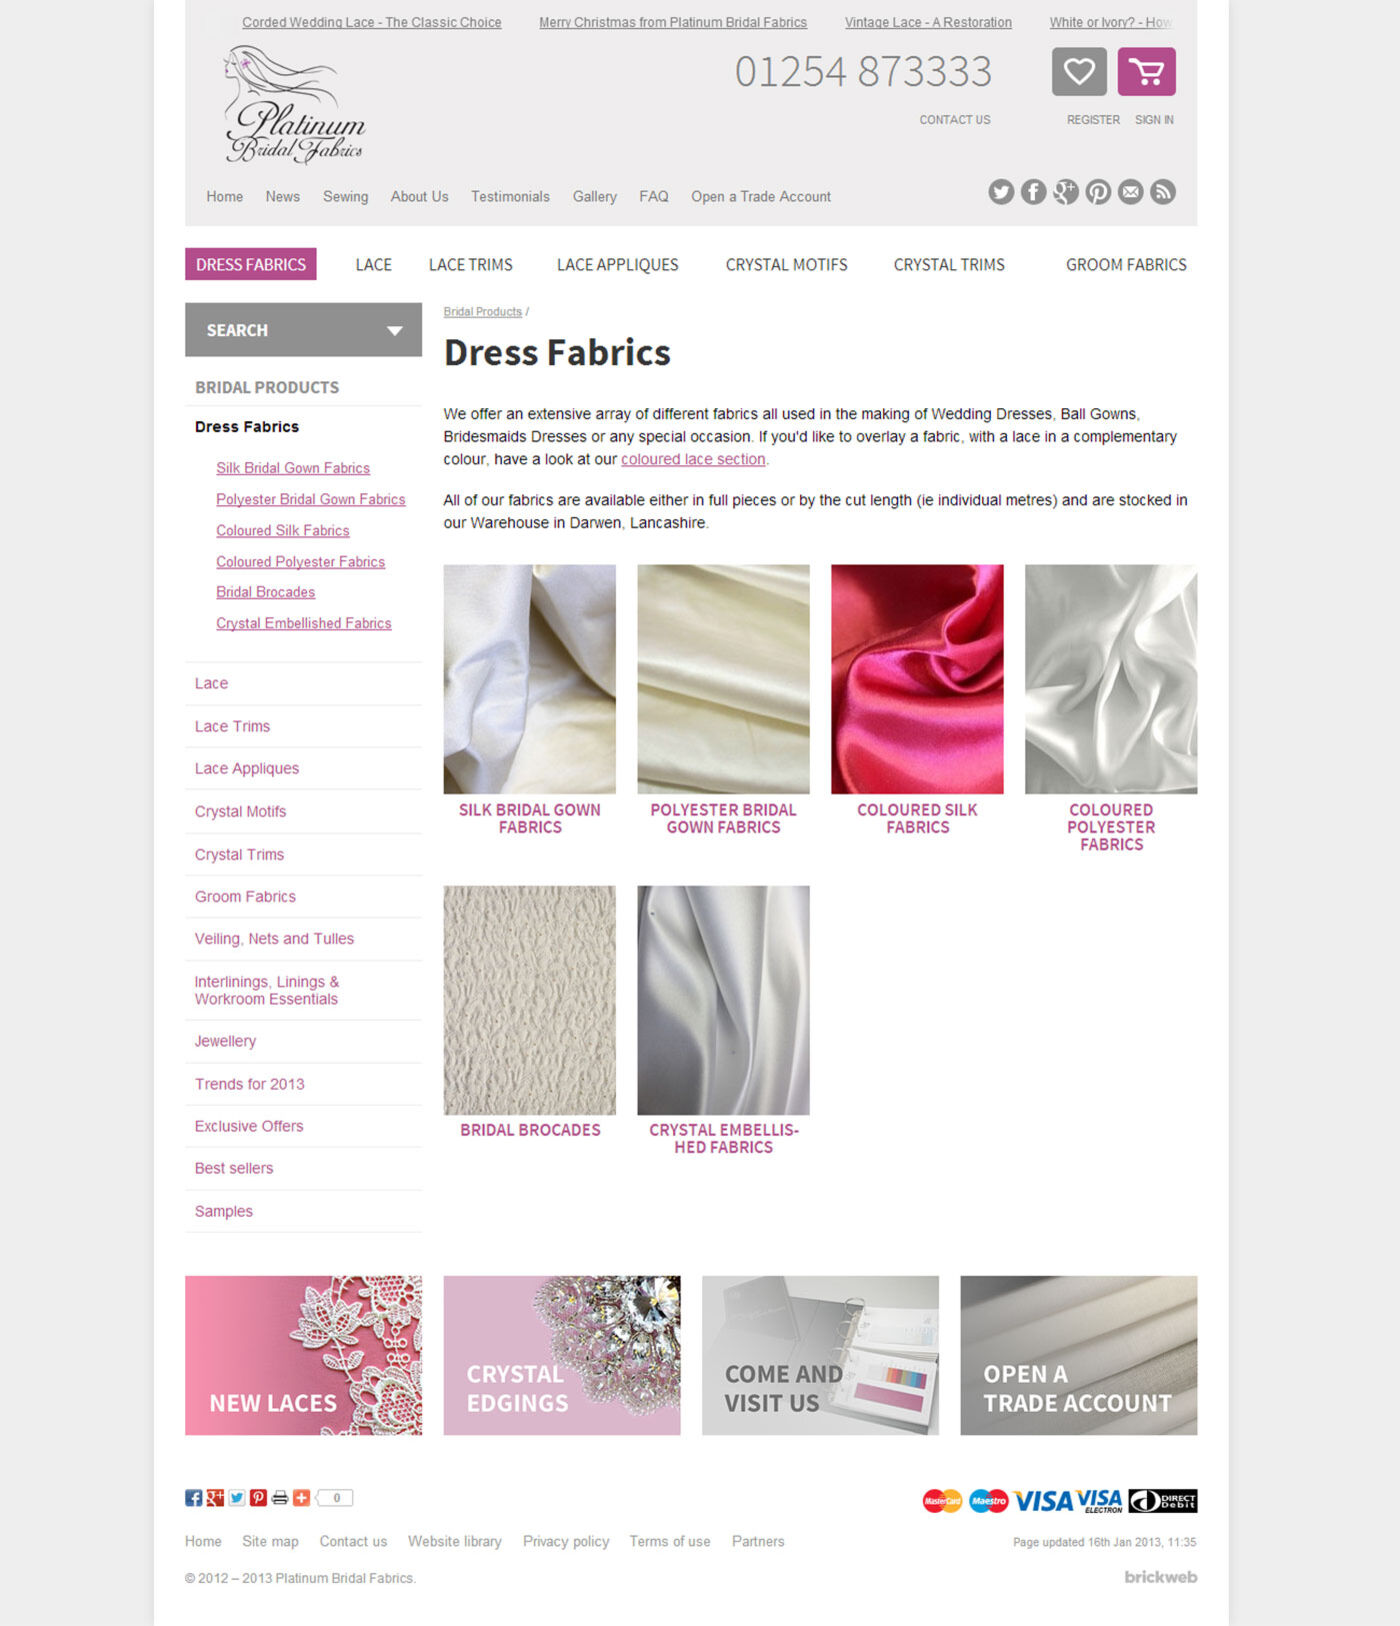 Bridal Fabrics (2013) Products